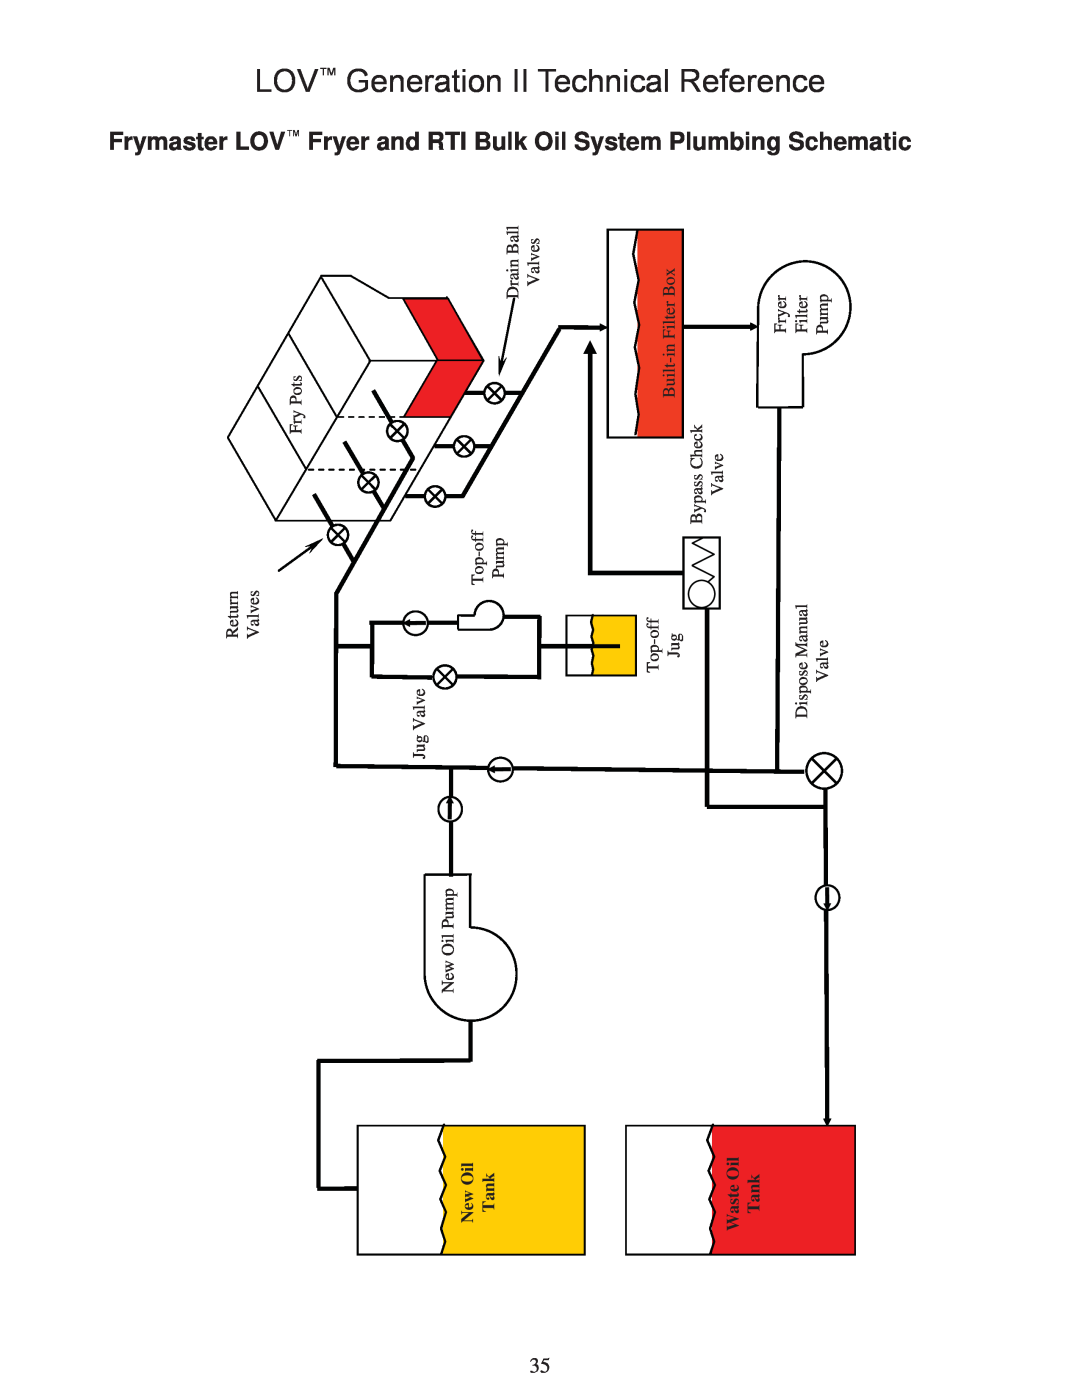 Frymaster M3000 Frymaster LOV Fryer and RTI Bulk Oil System Plumbing Schematic, LOV Generation II Technical Reference 